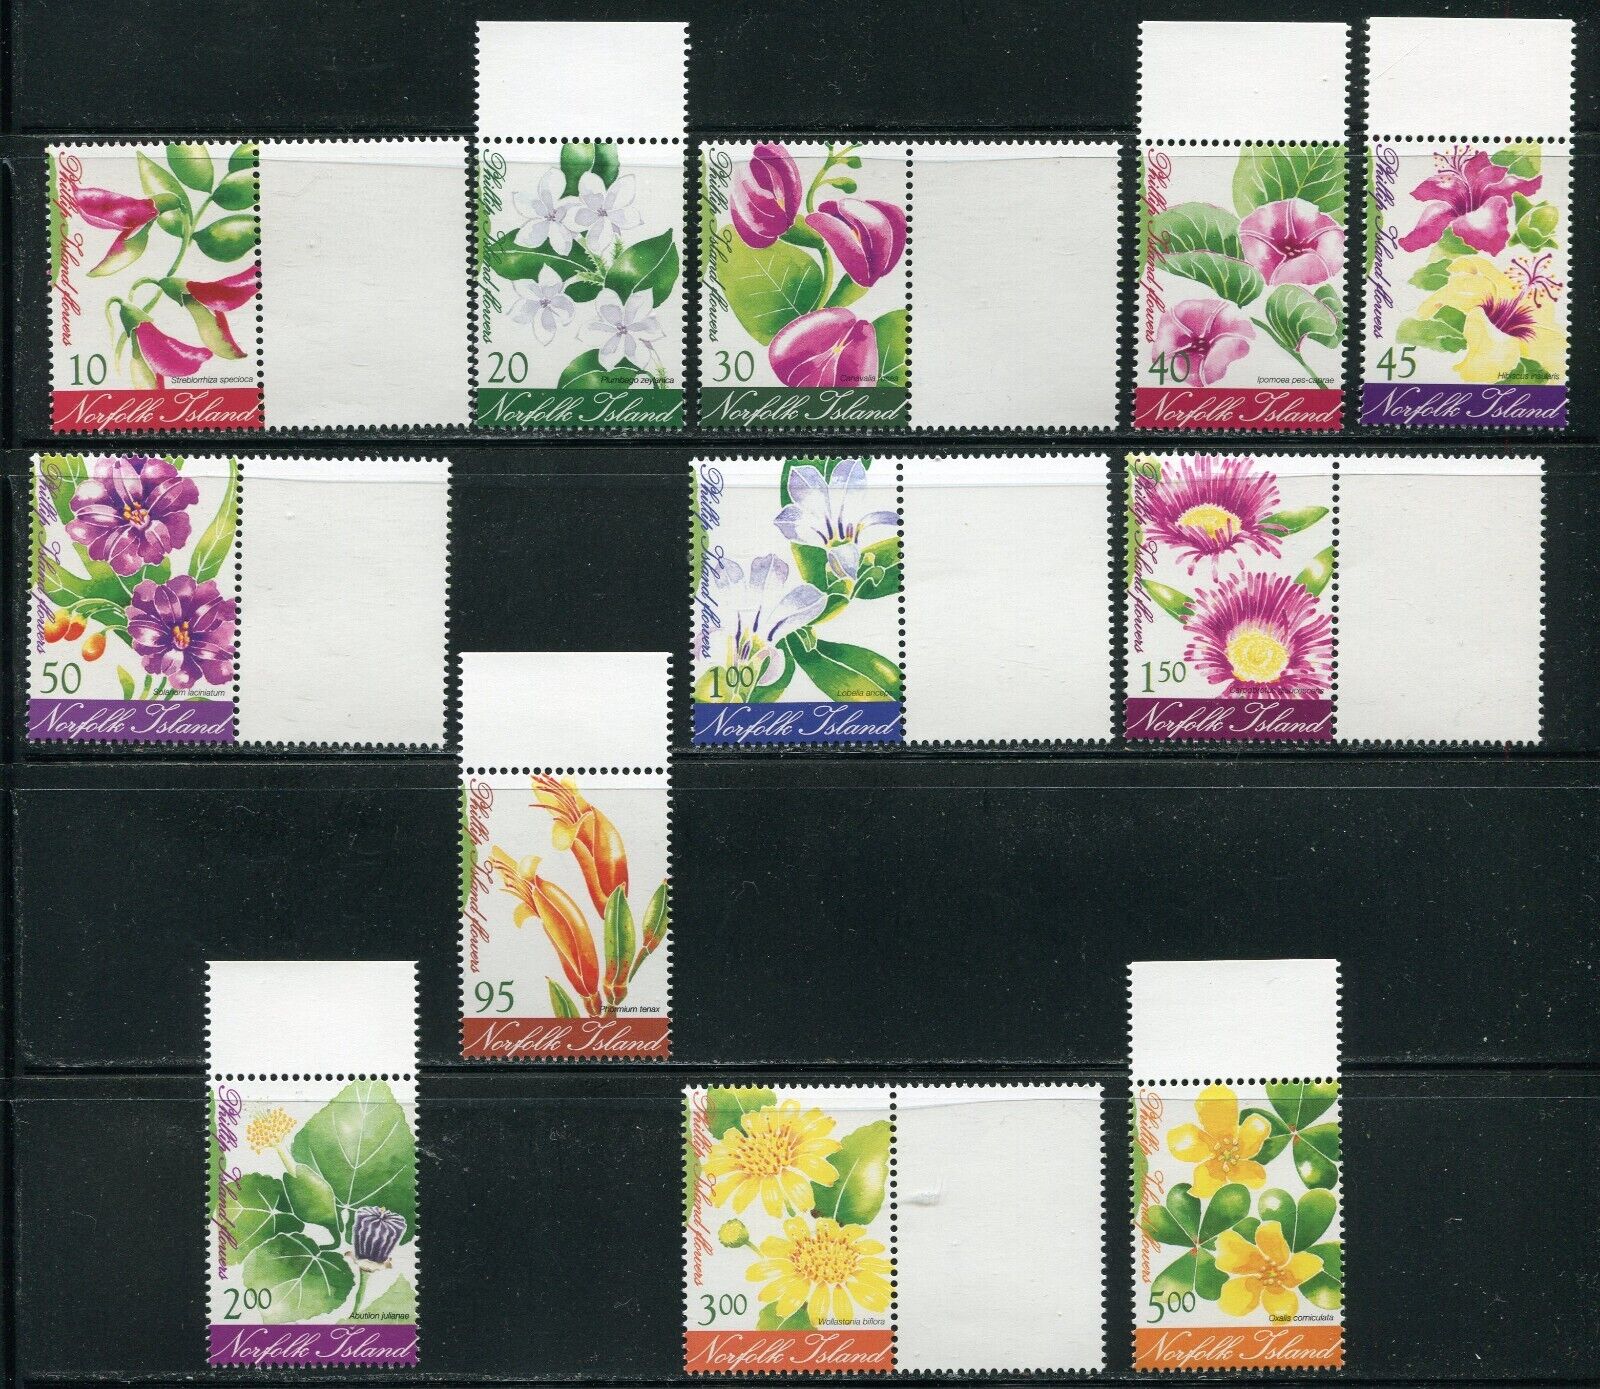 Norfolk Island 767 - 778 Phillip Island Flowers Complete Stamp Set MNH 2002 